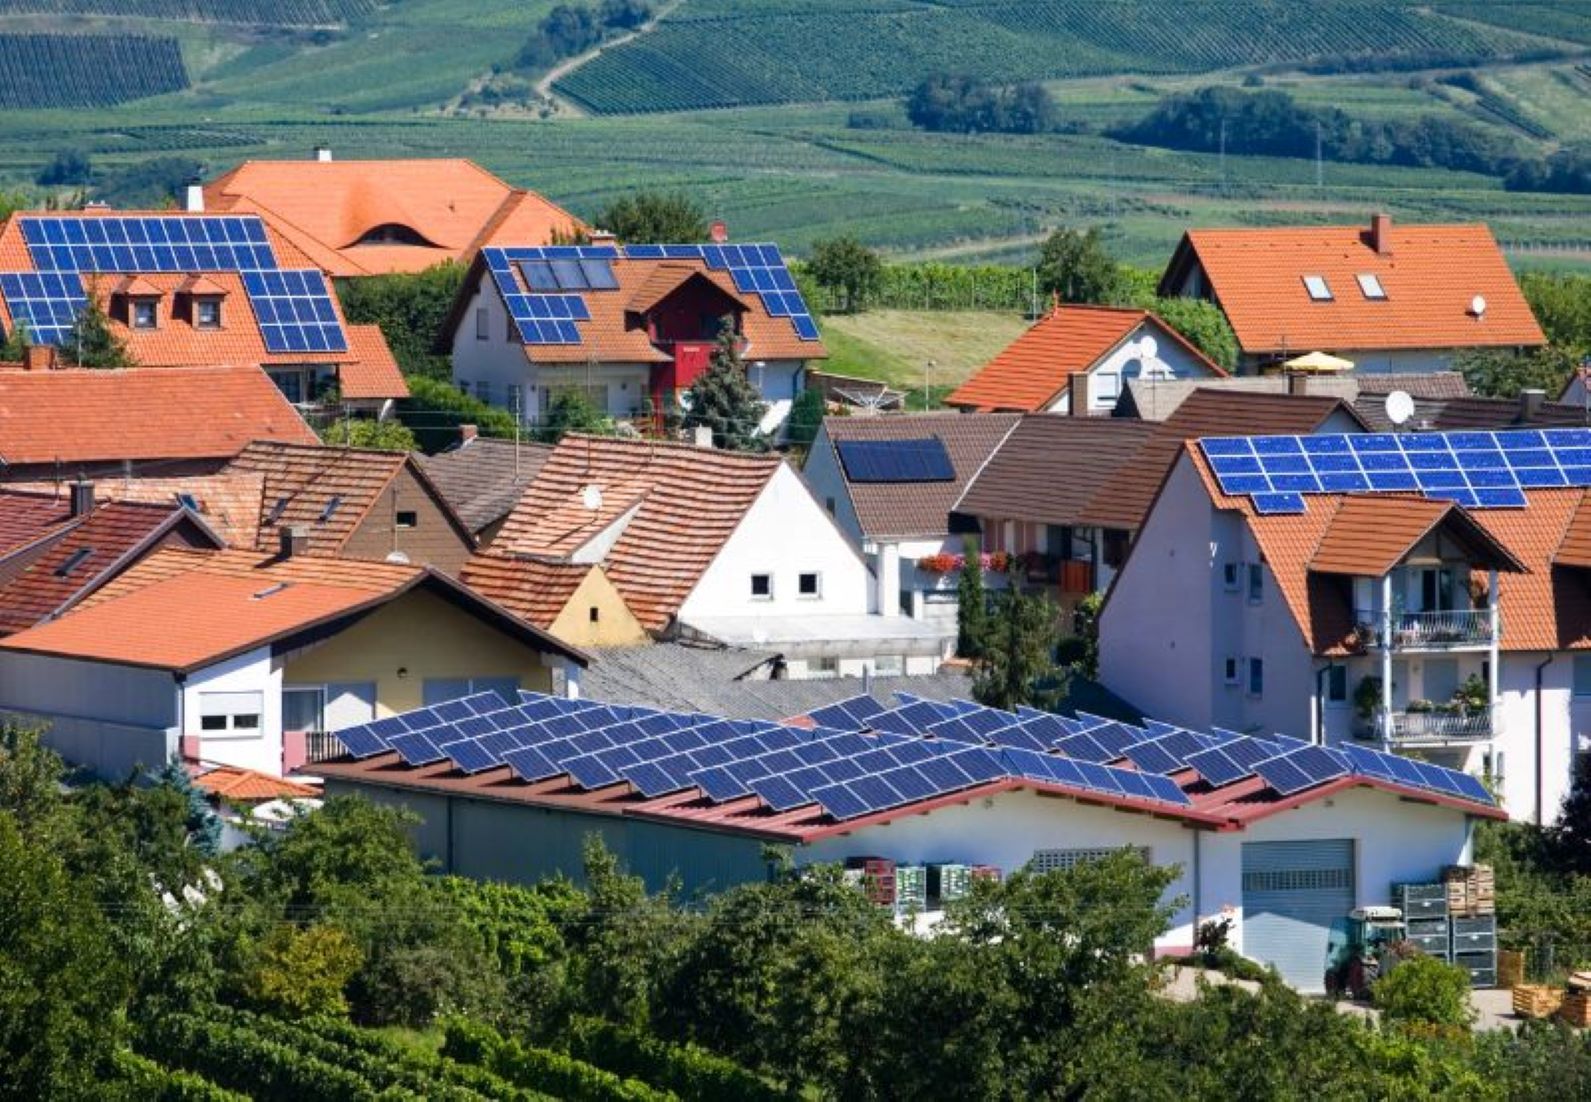 Indian Gov’t Approves Rooftop Solar Scheme For 10 Million Households